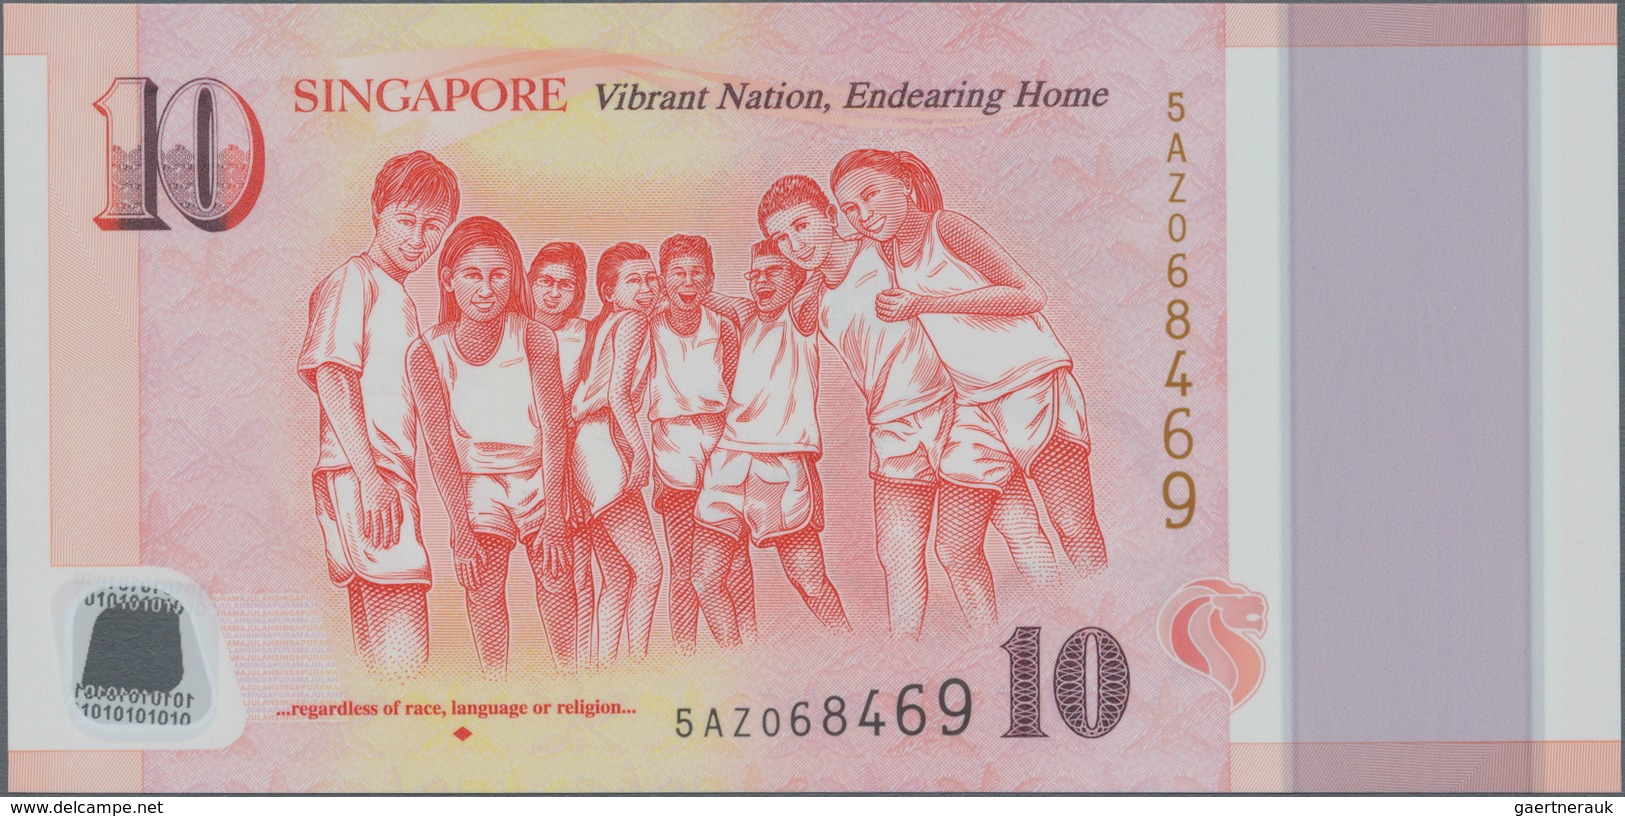 Singapore / Singapur: Monetary Authority of Singapore set with 6 banknotes of the 2015 series commem